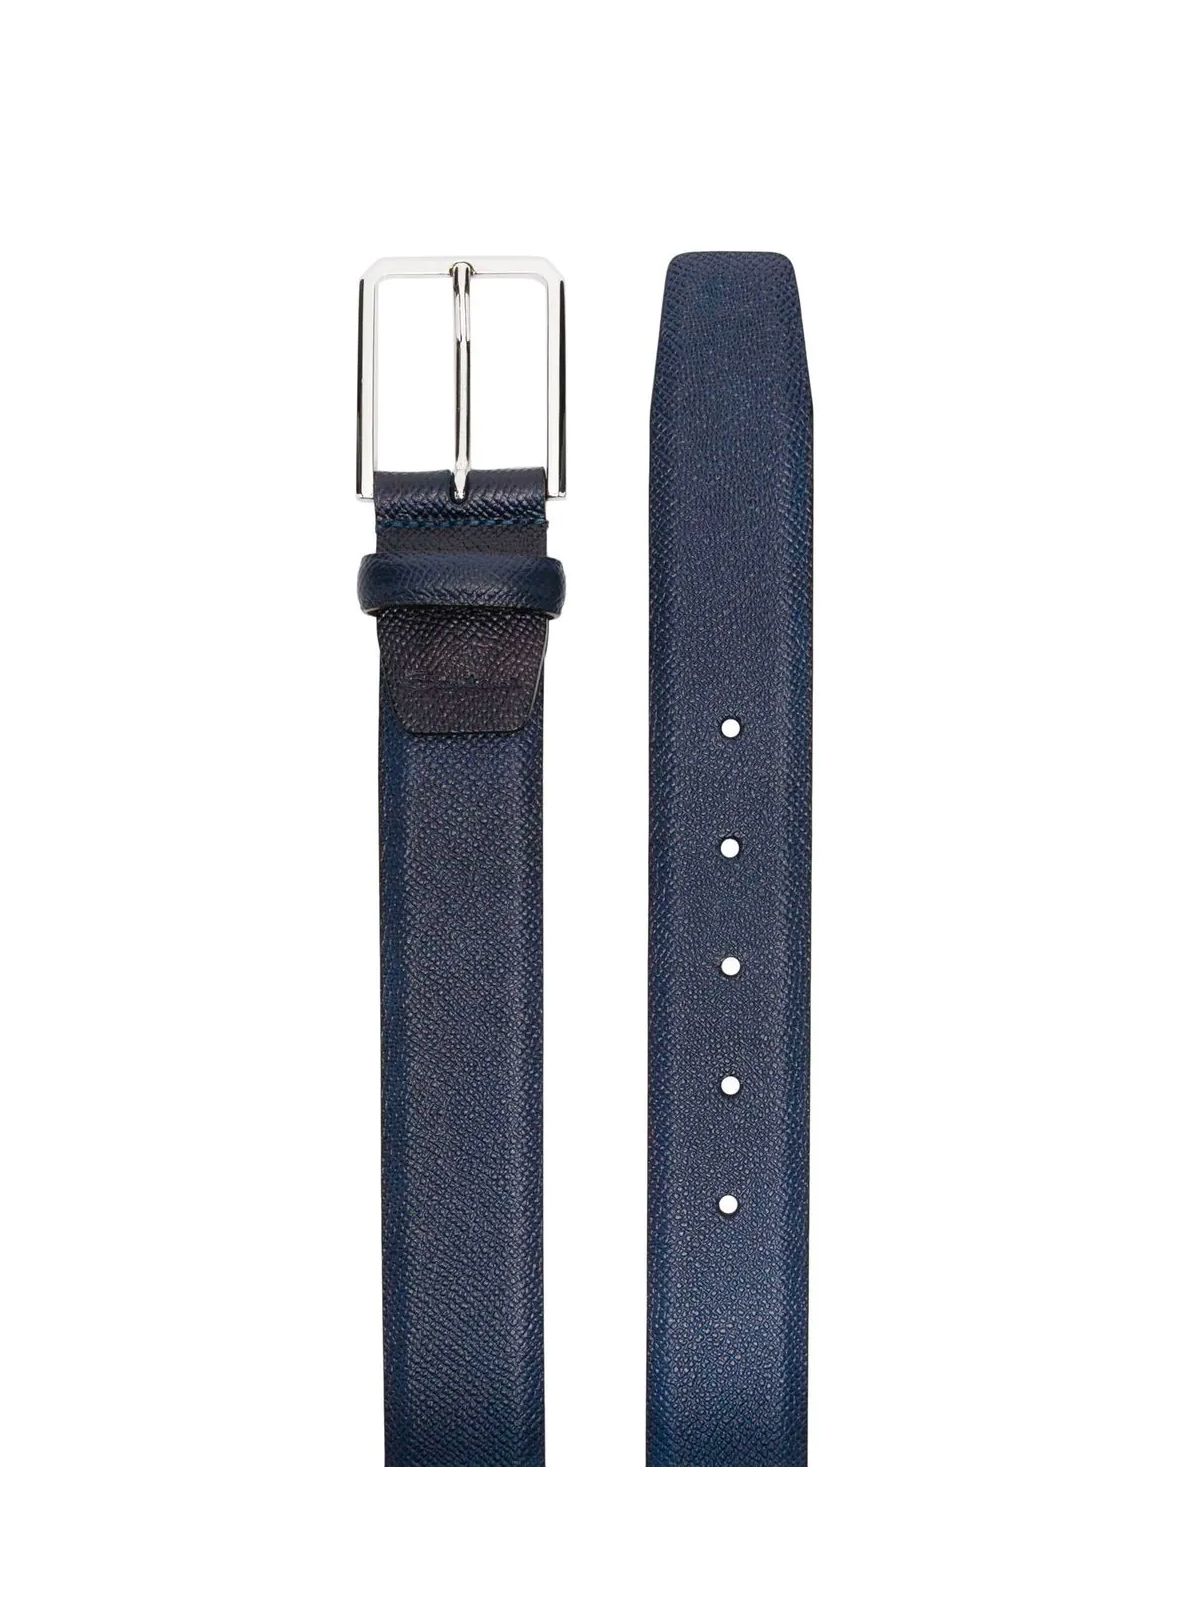 Shop Santoni Men's Belts: Regular Belt